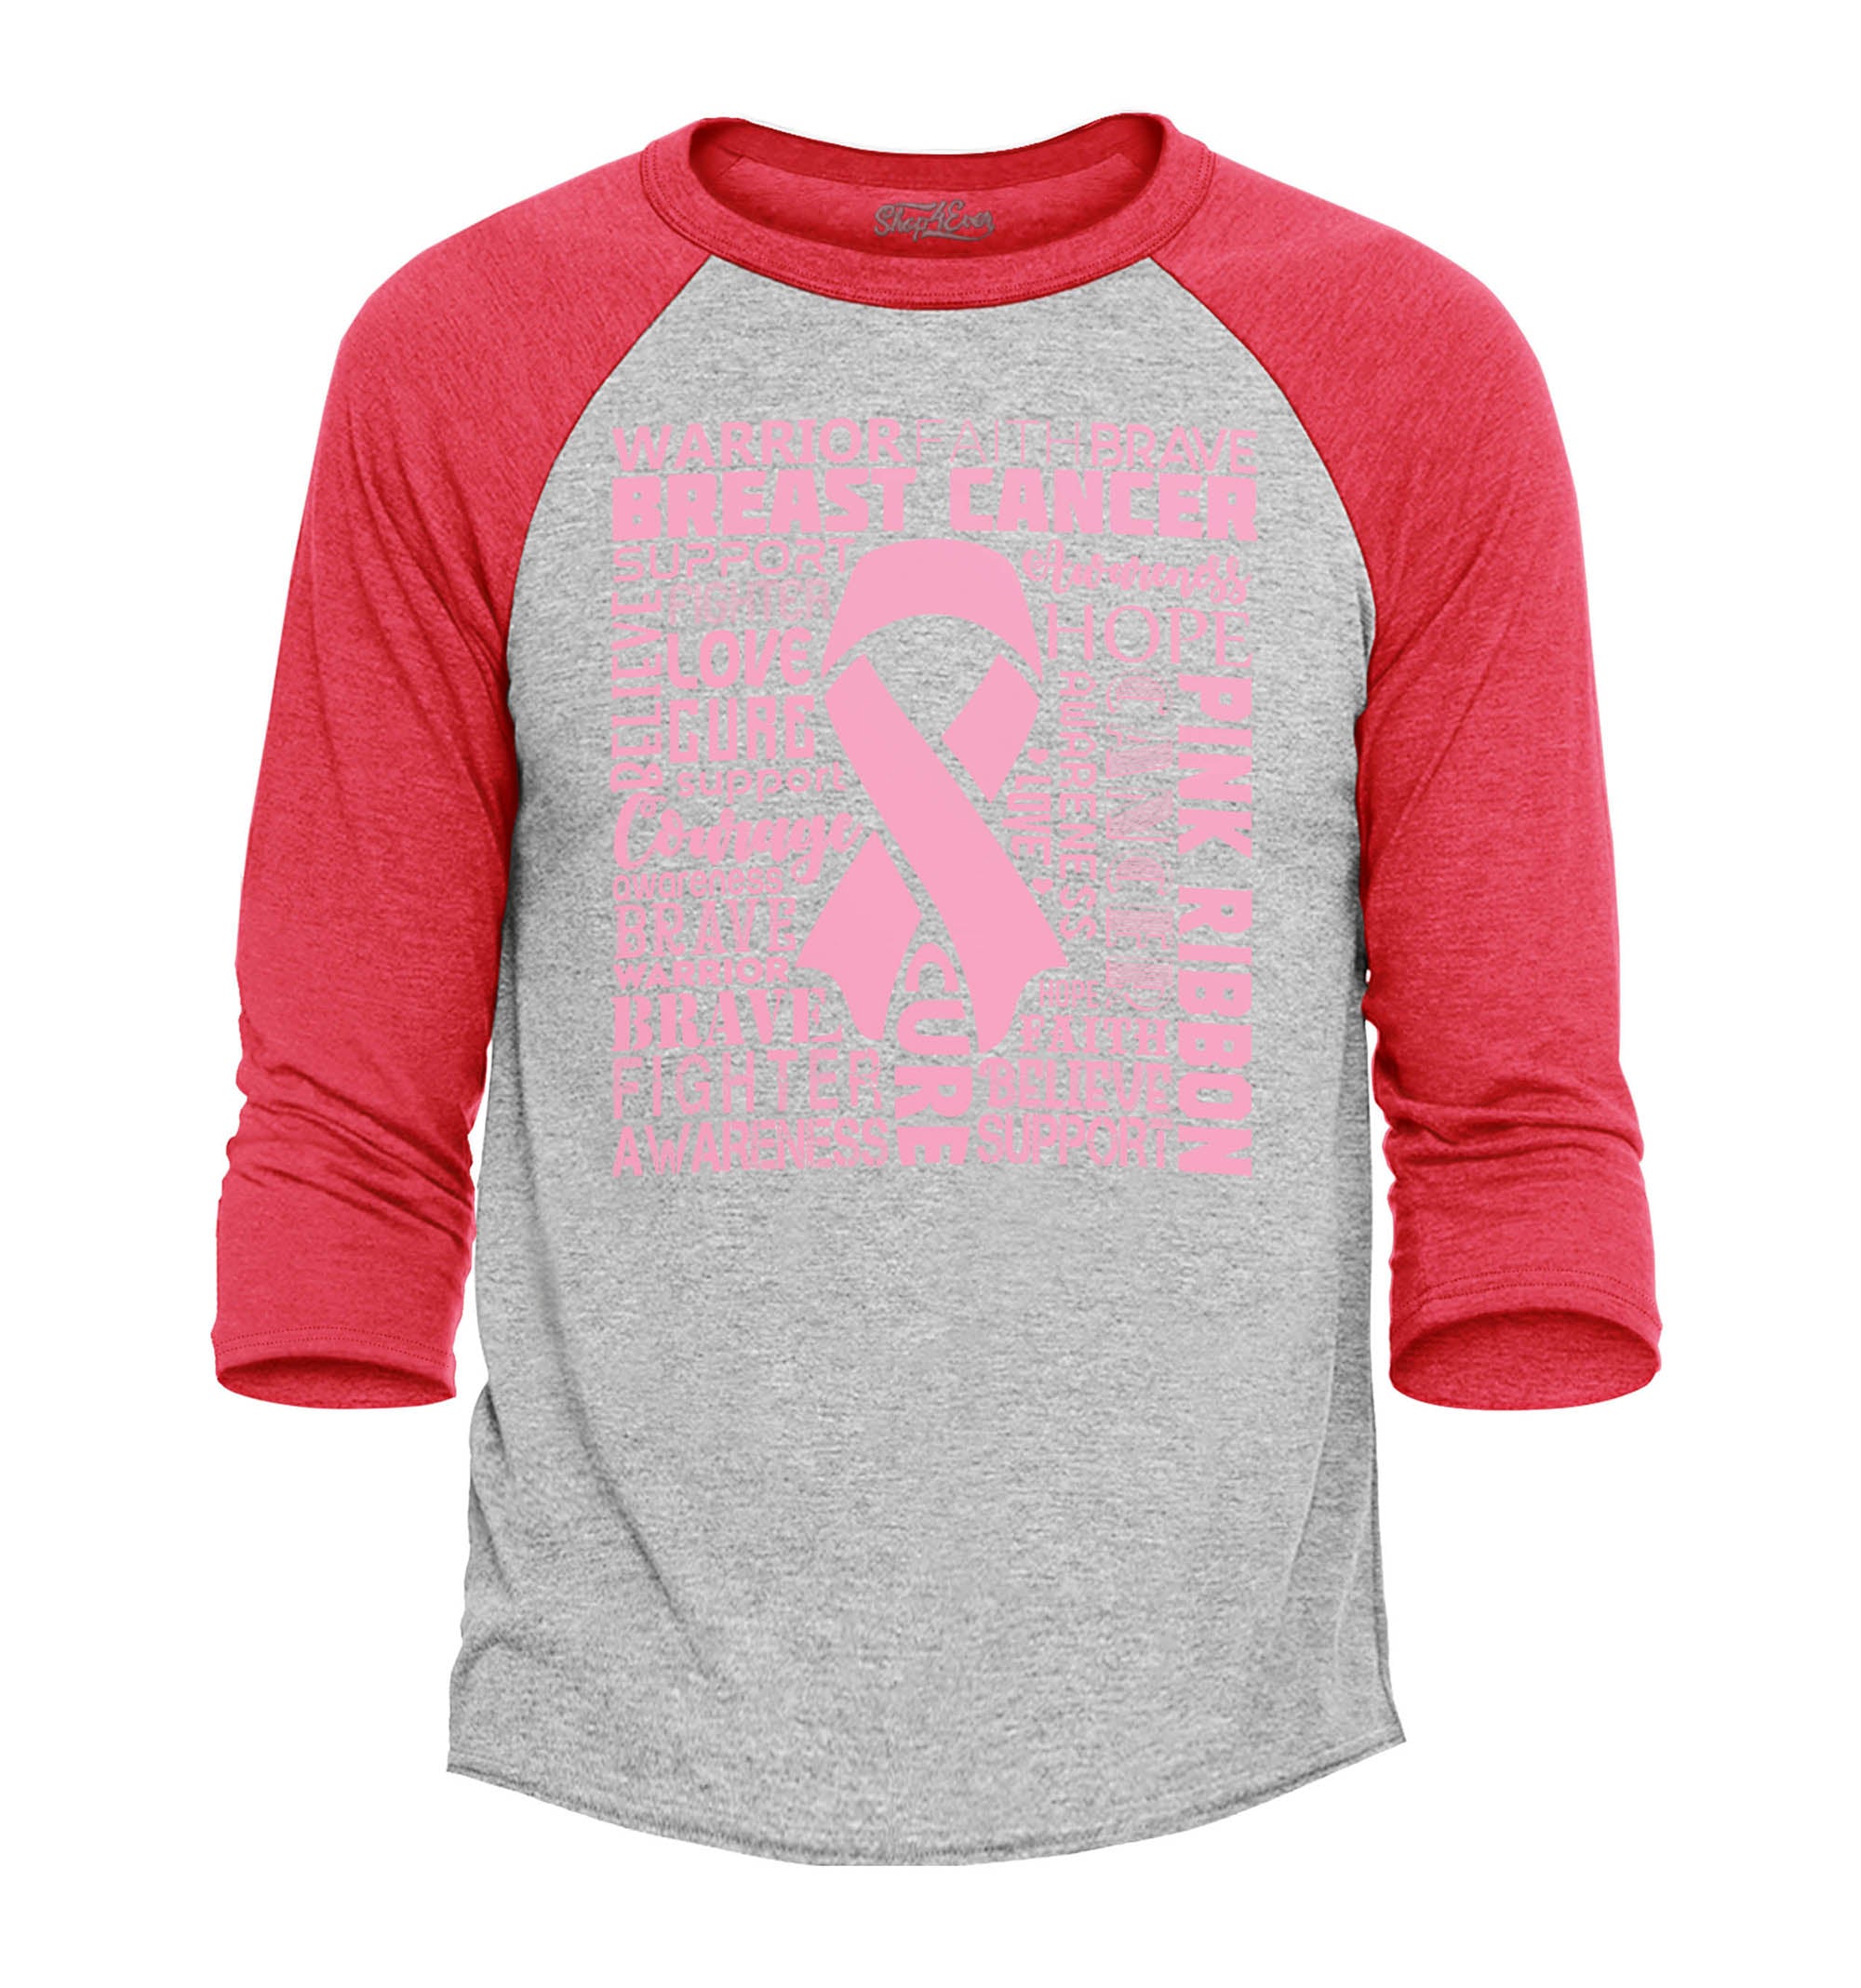 Breast Cancer Awareness Pink Ribbon Word Cloud Raglan Baseball Shirt